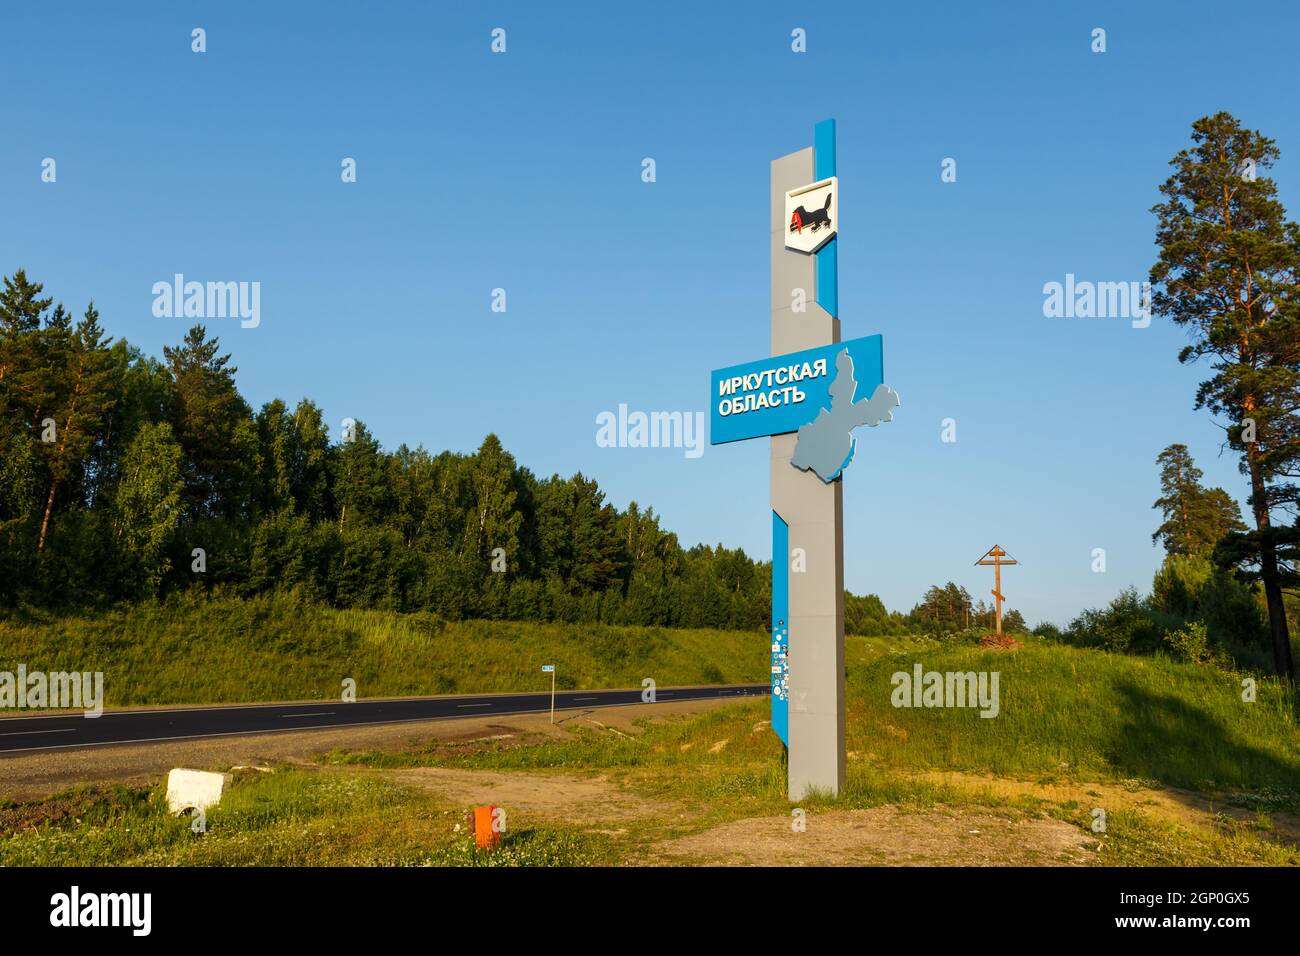 Irkutsk region, Russia - July 5, 2021: Entrance stele Irkutsk region. A road sign on the border of the Irkutsk Region and the Krasnoyarsk Territory. Stock Photo